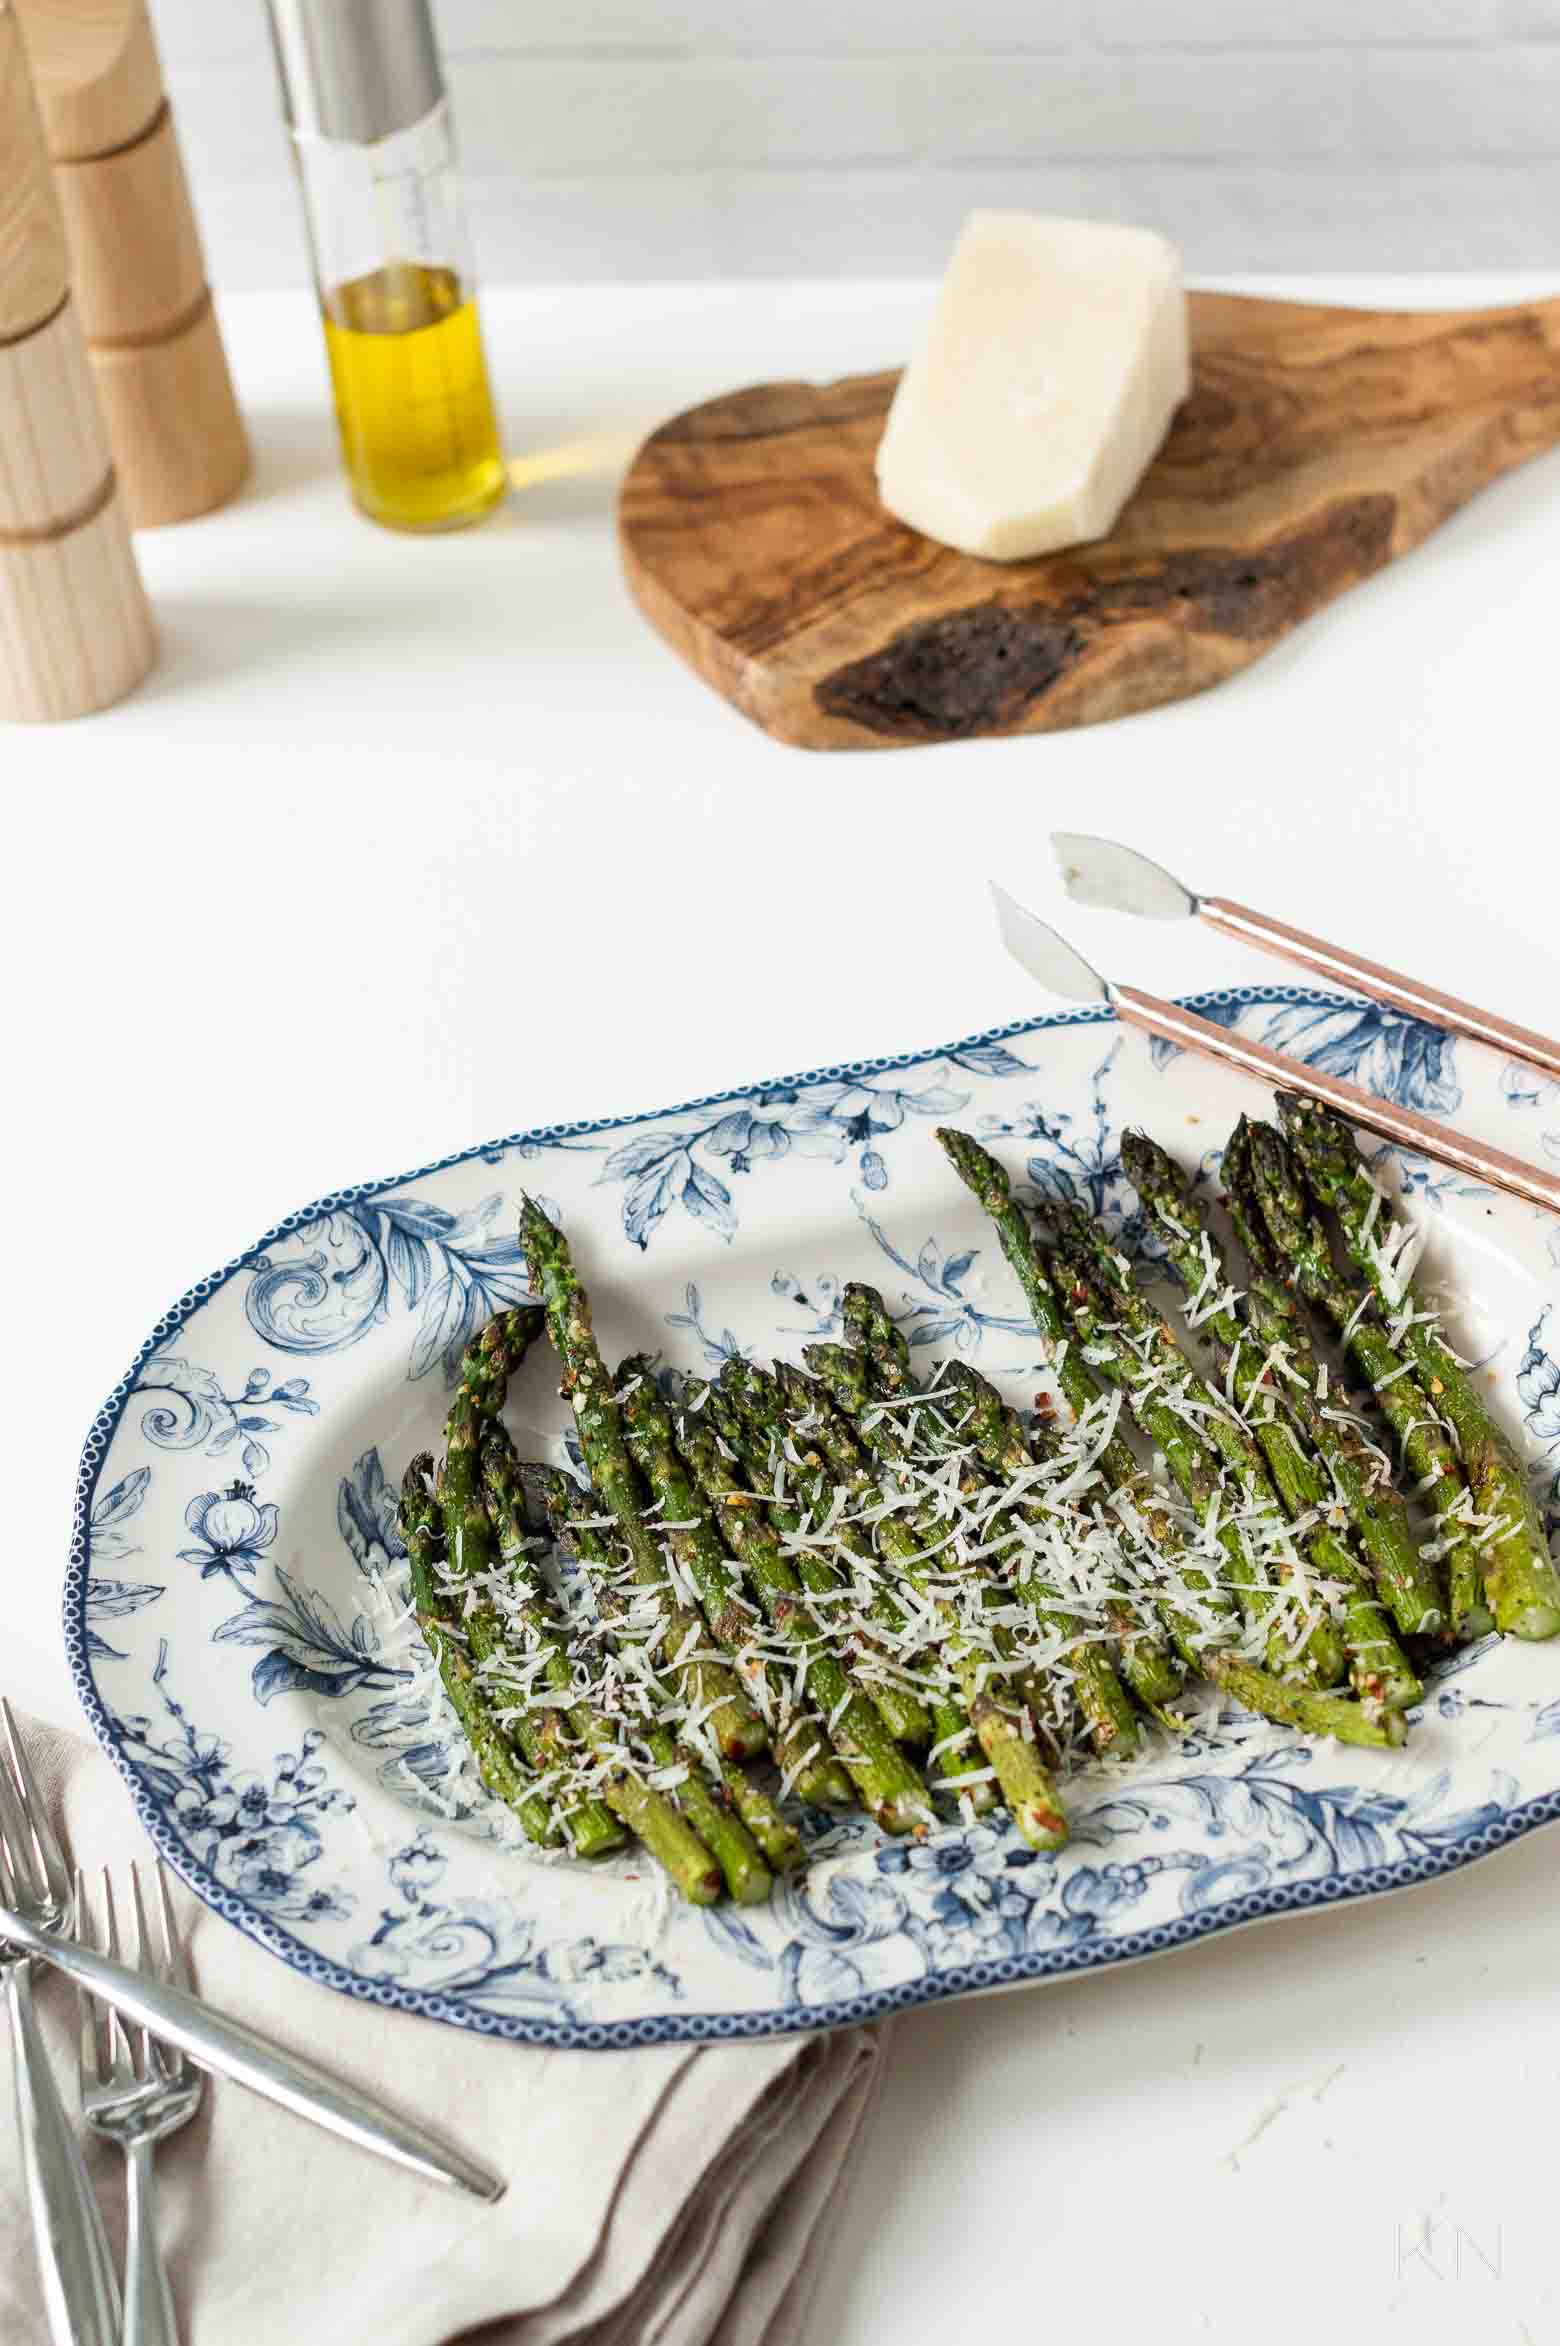 Oven Roasted Asparagus Dinner Side Idea & Recipe